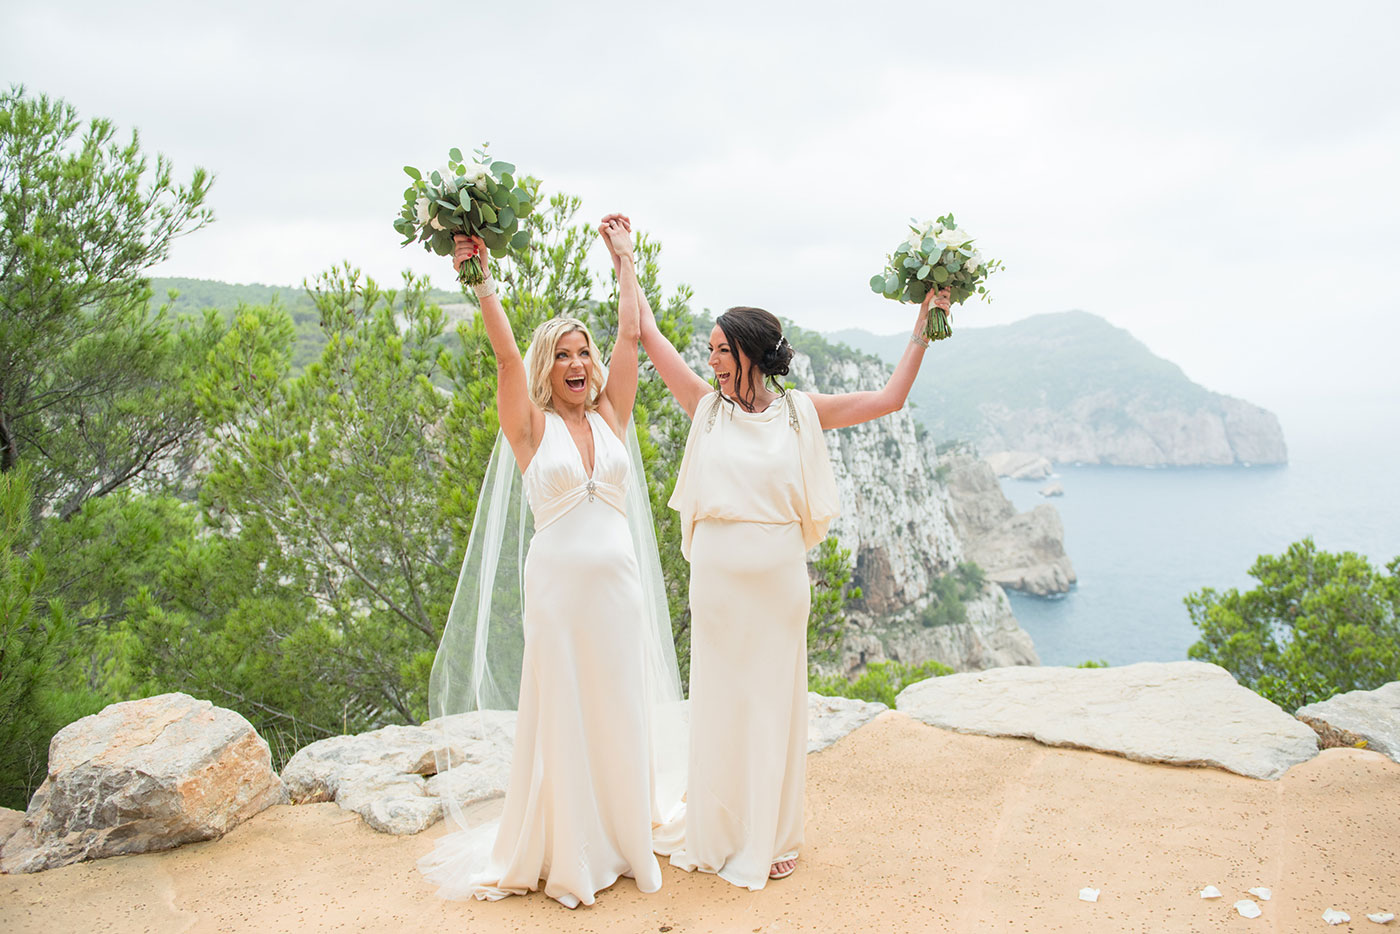 Gemma & Rebecca's Ibiza Wedding